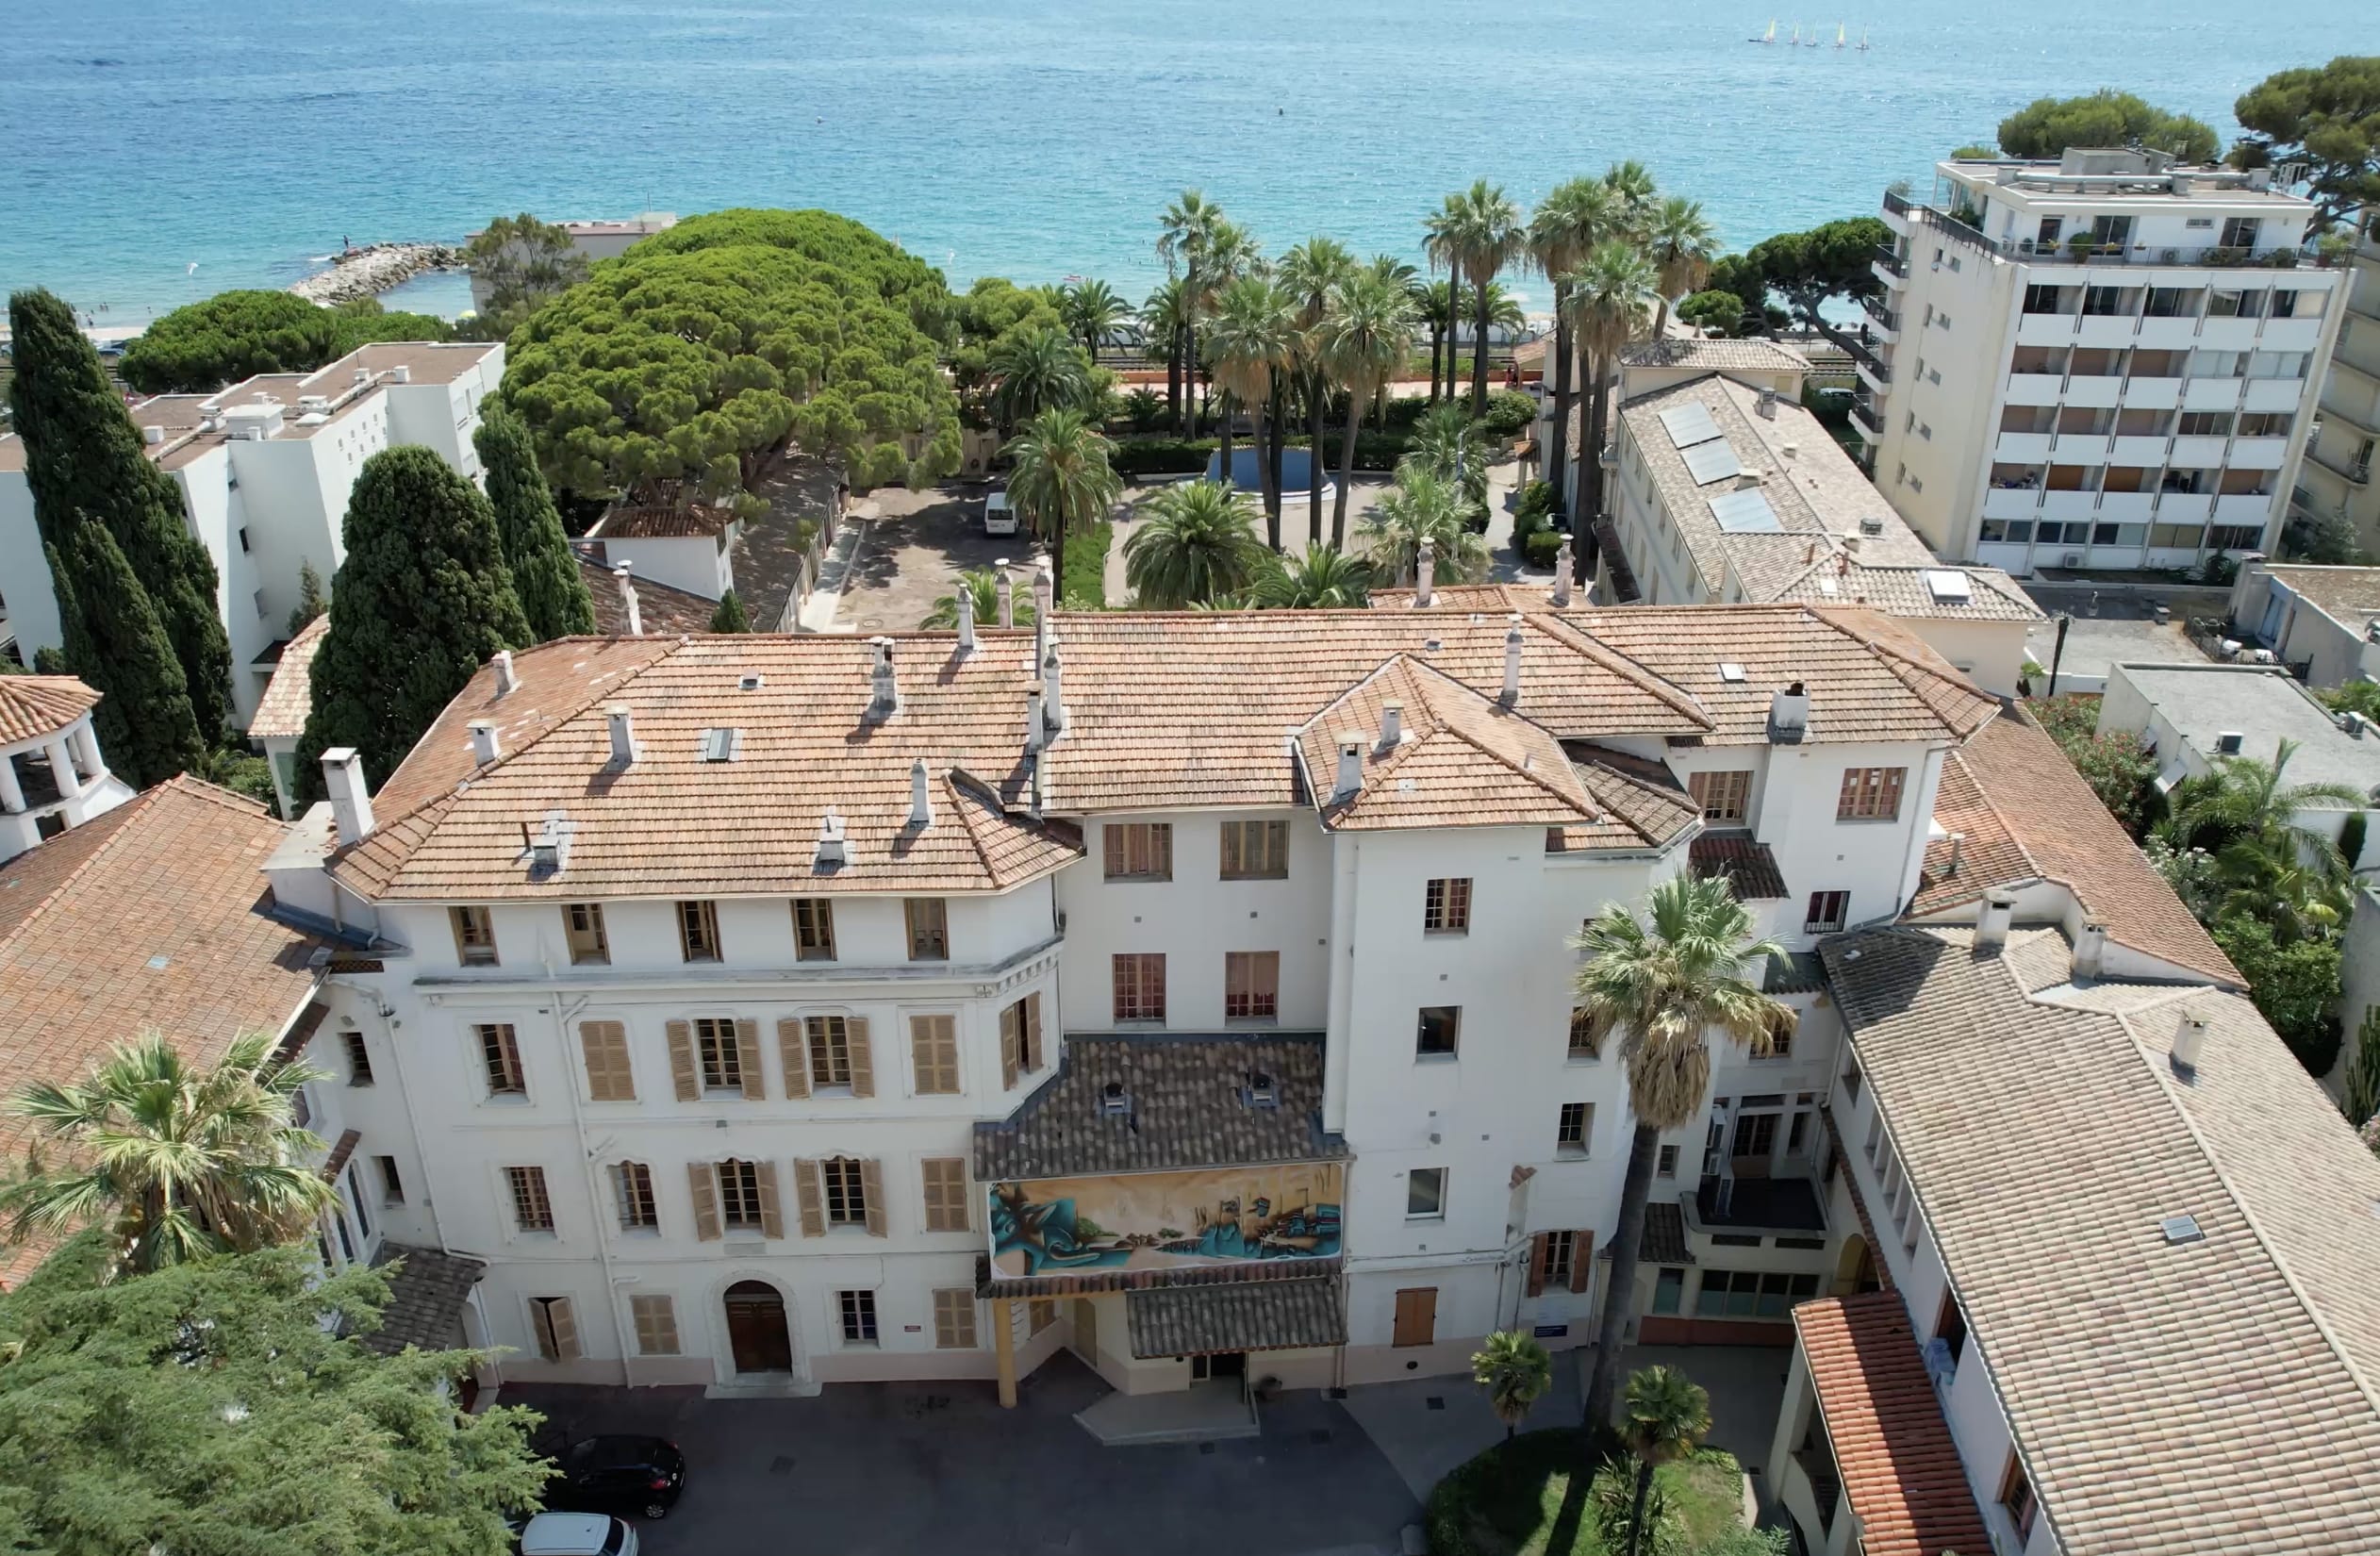 Hostel Santa Maria - Côte d’Azur